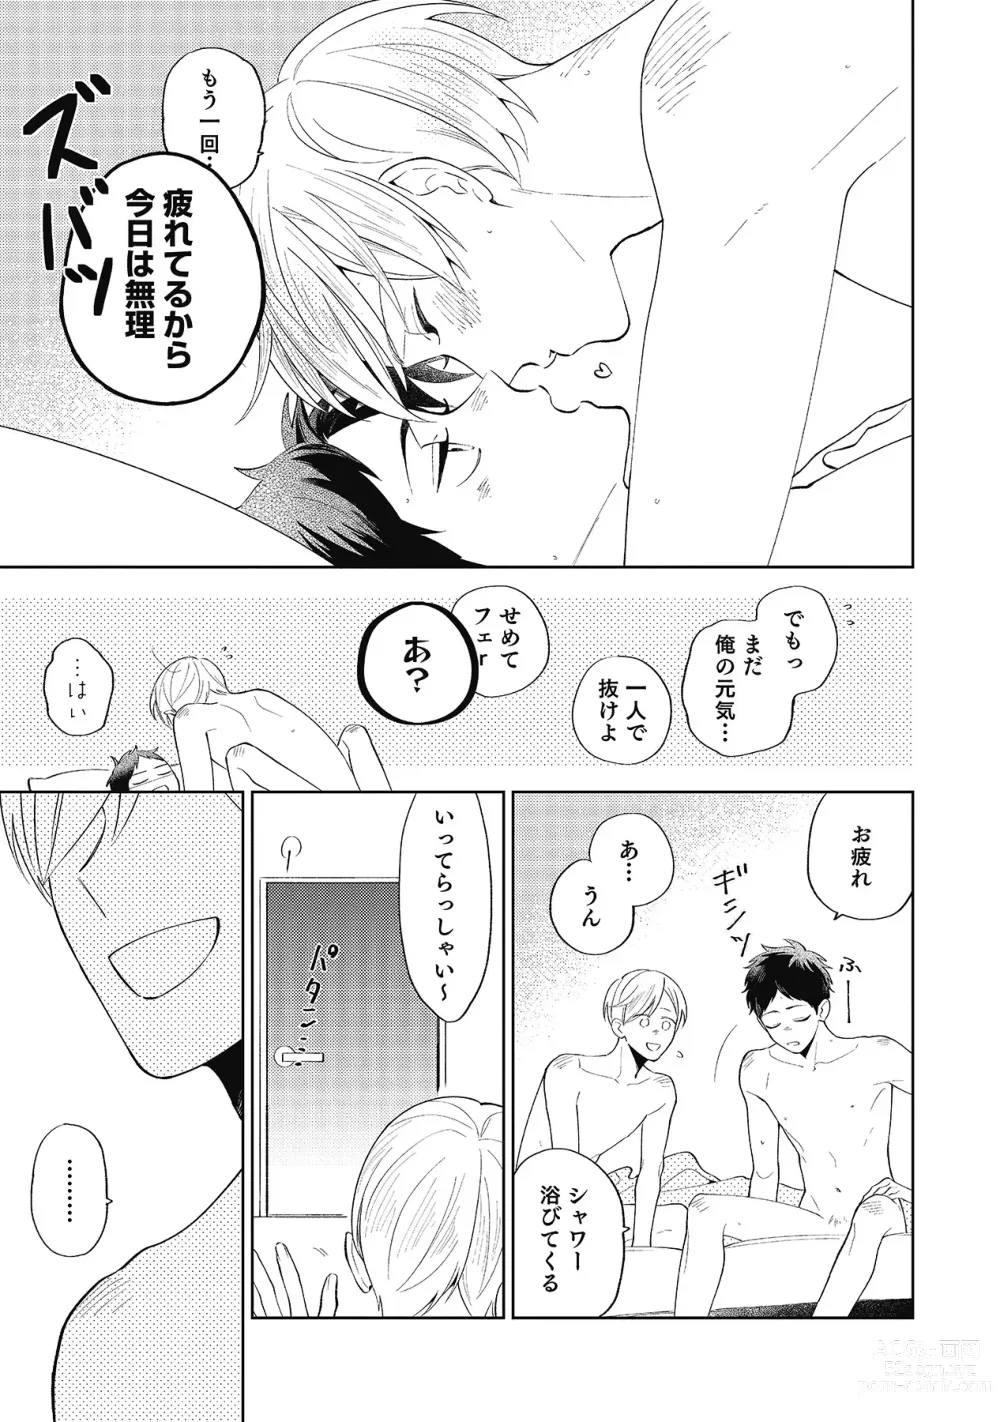 Page 9 of manga Sentimental Darling